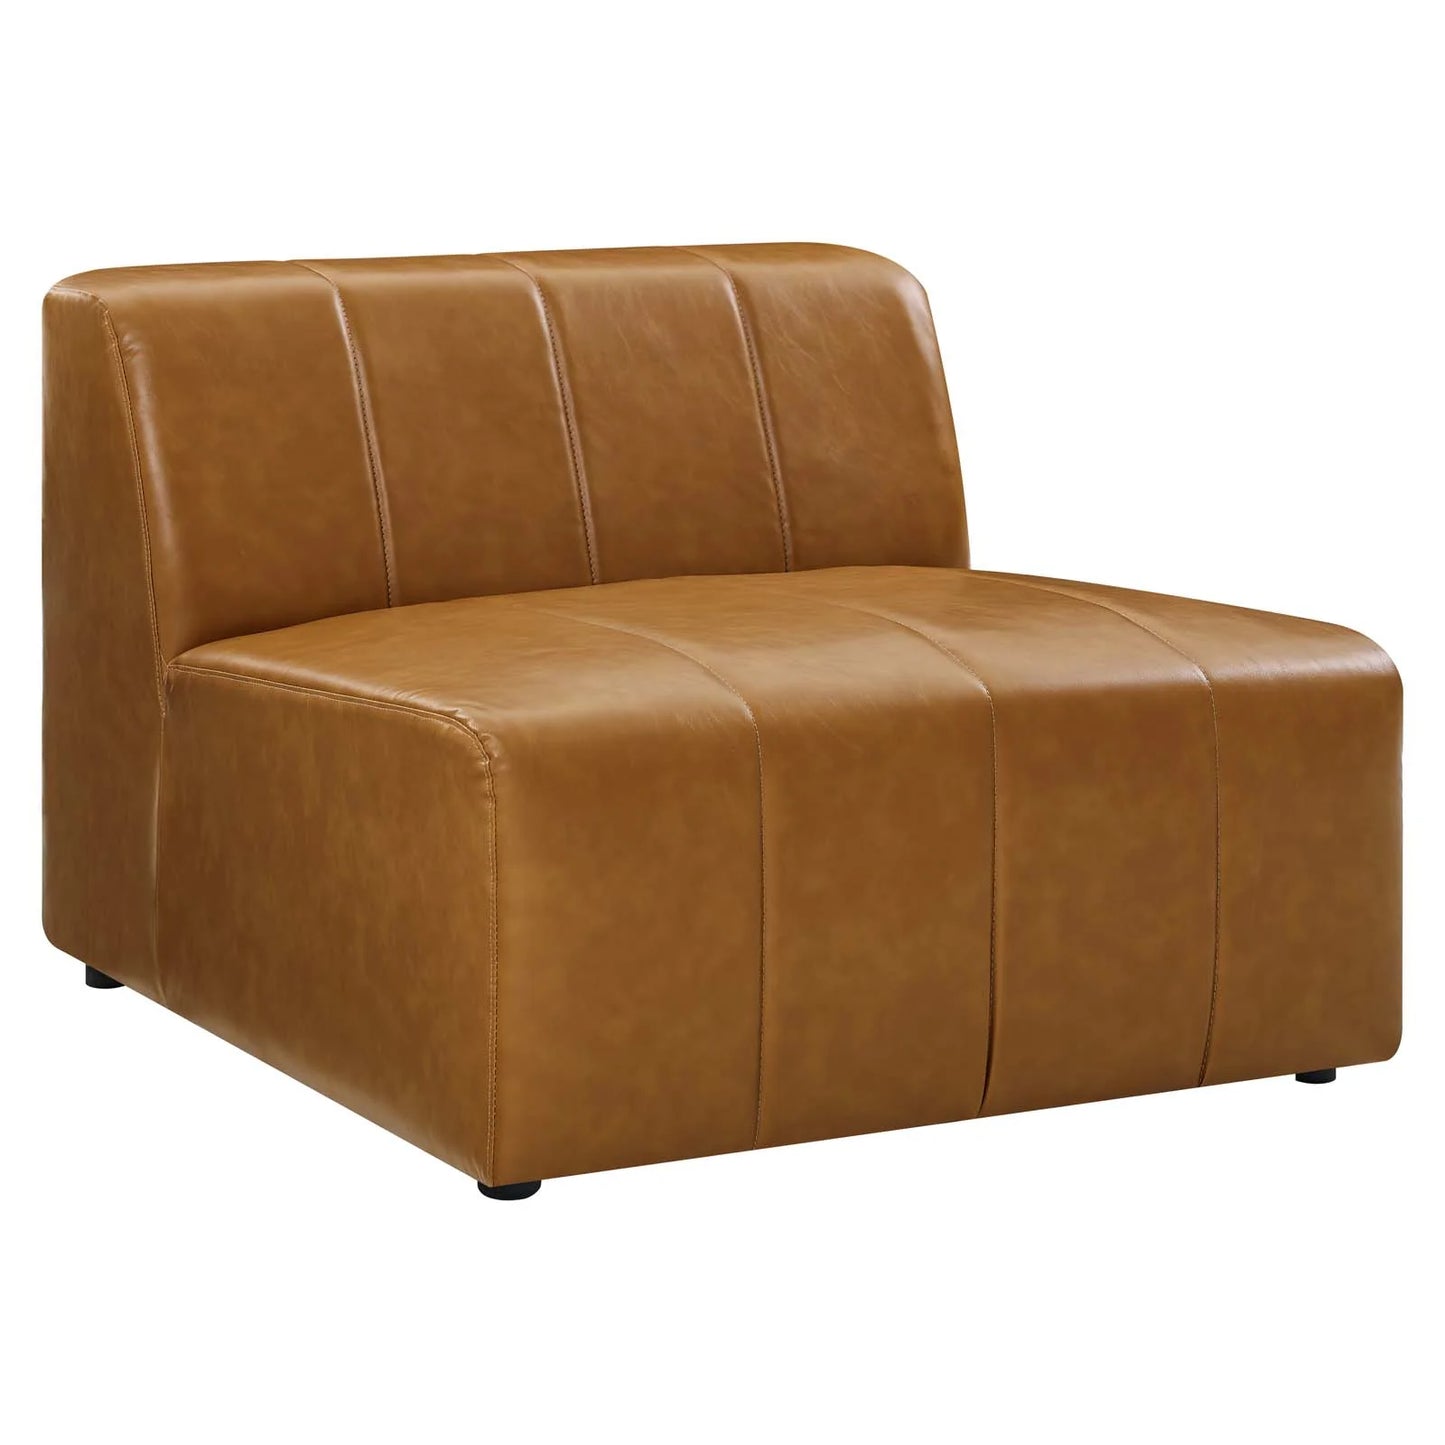 Braxton Vegan Leather 4-Piece Sectional Sofa